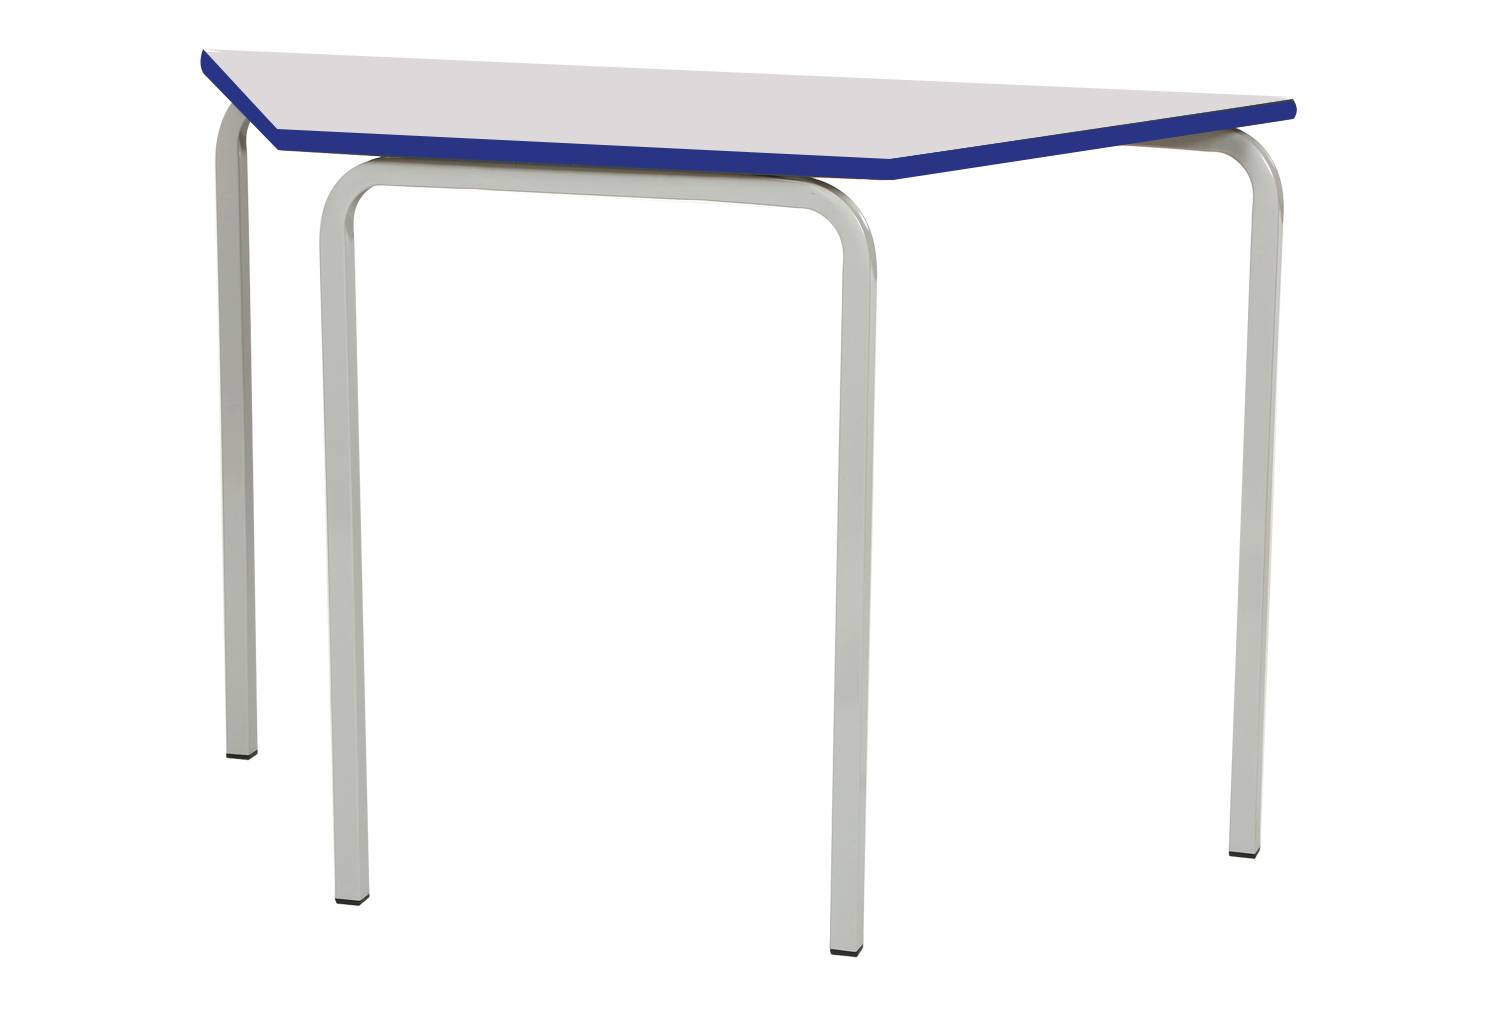 Qty 4 - Educate Crush Bent Trapezoidal Classroom Table 4-5 Years (PU Edge), 110wx55dx53h (cm), Light Grey Frame, Light Grey Top